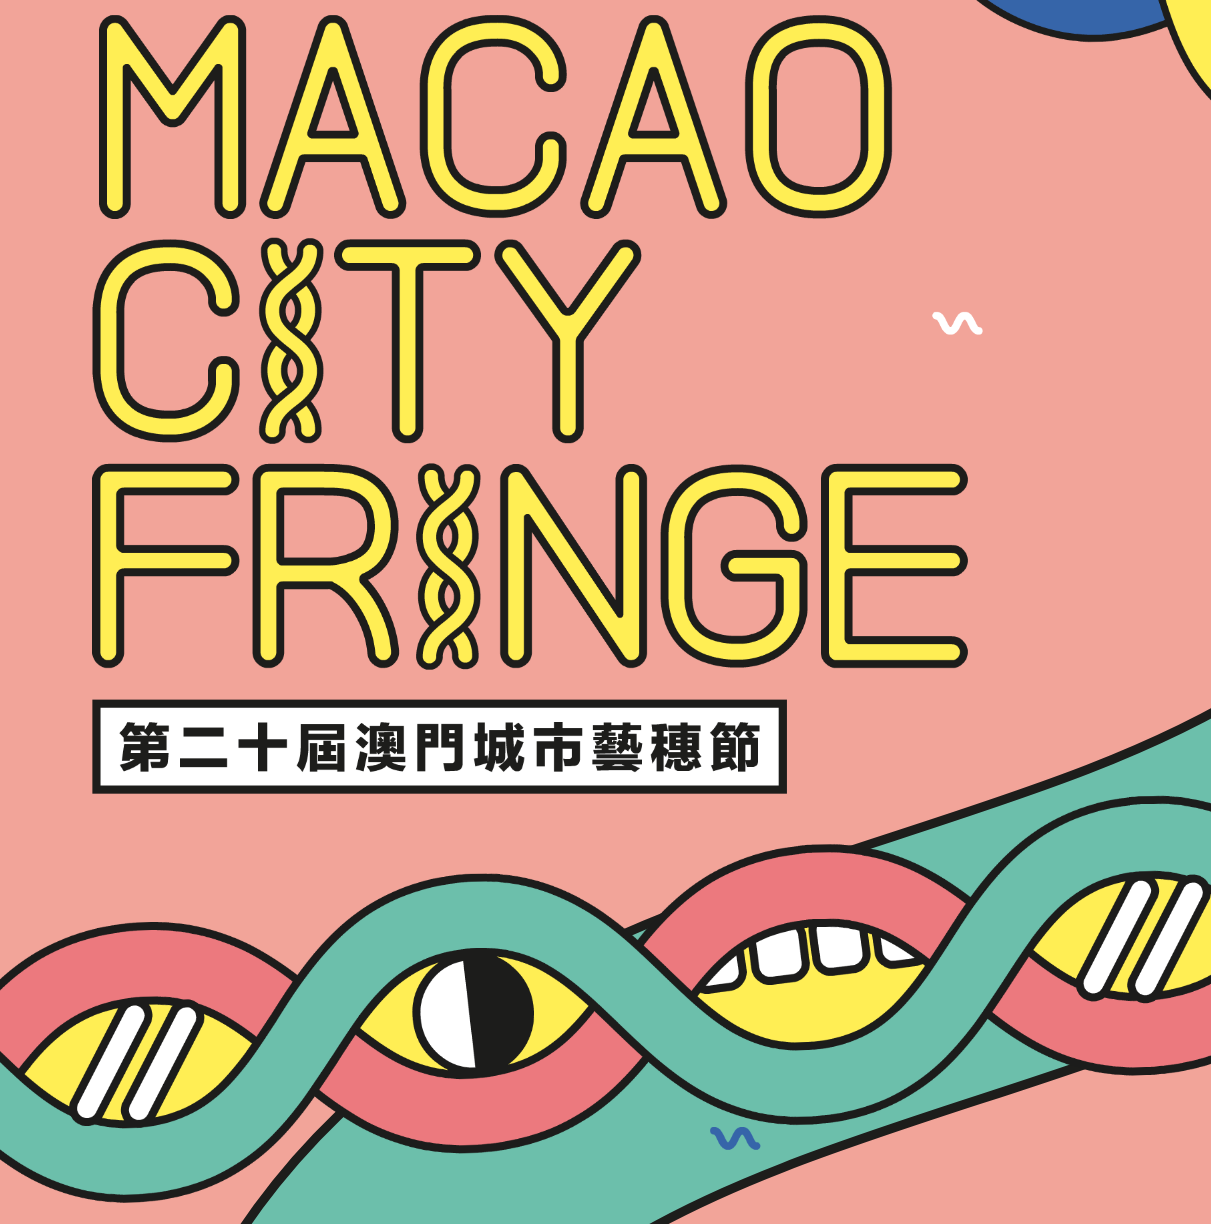 Macao City Fringe Festival 2021